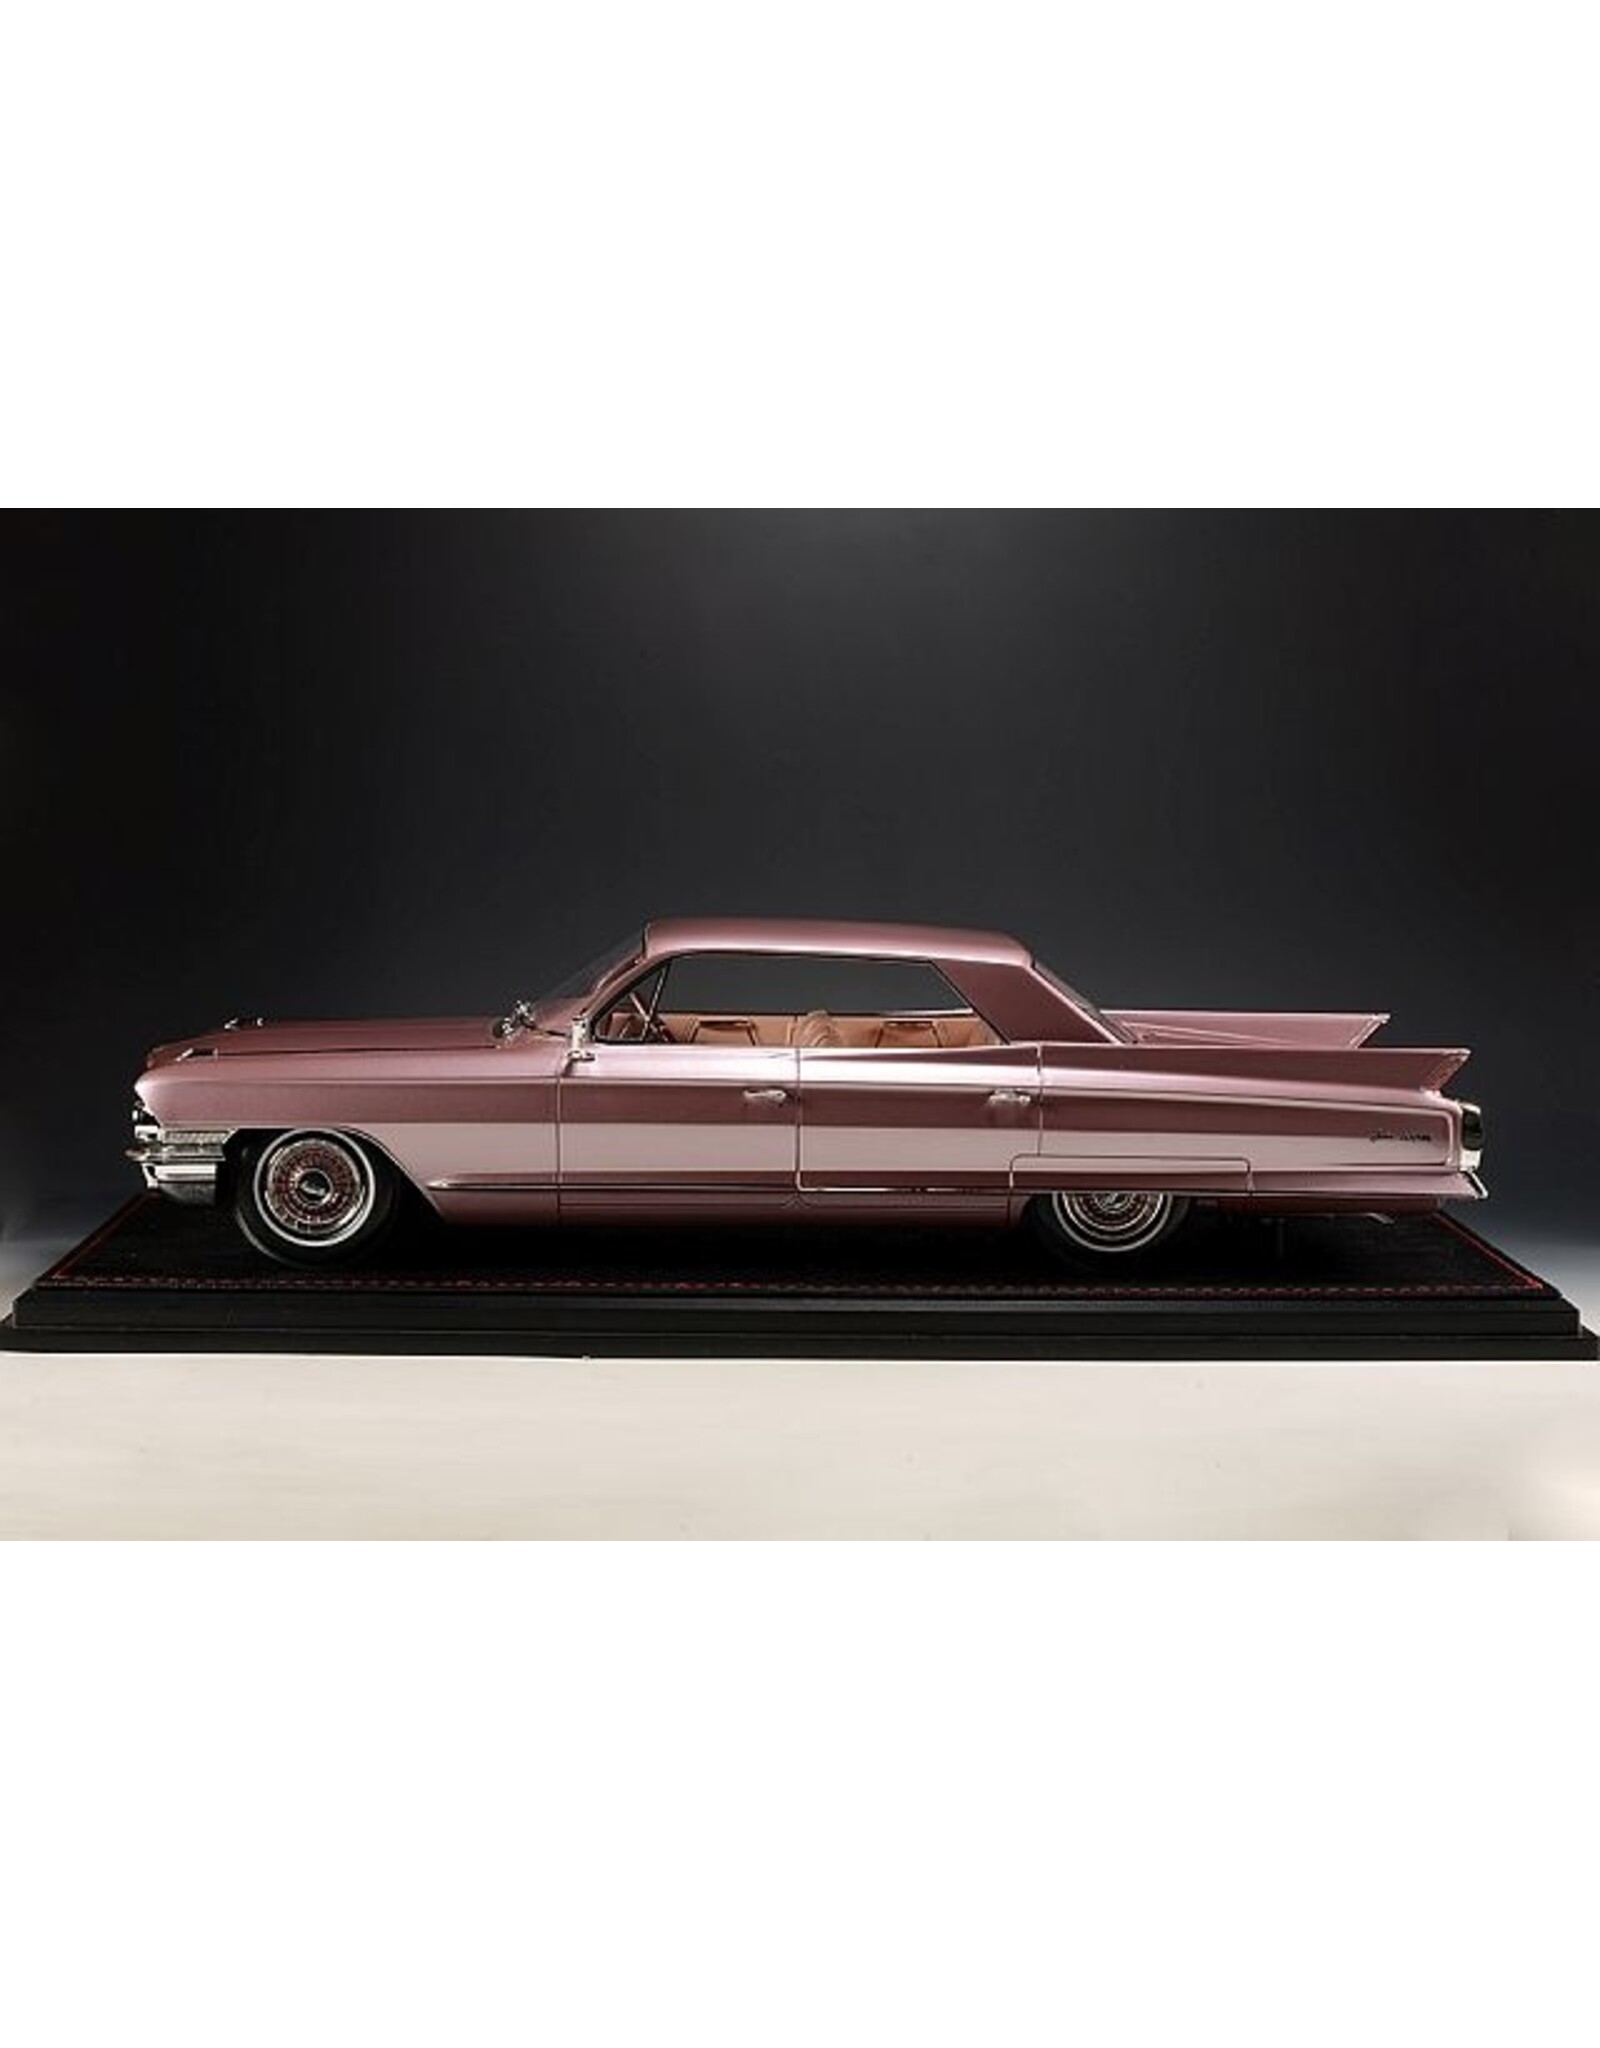 Cadillac(General Motors) Cadillac Sedan Deville(1962)heather metallic